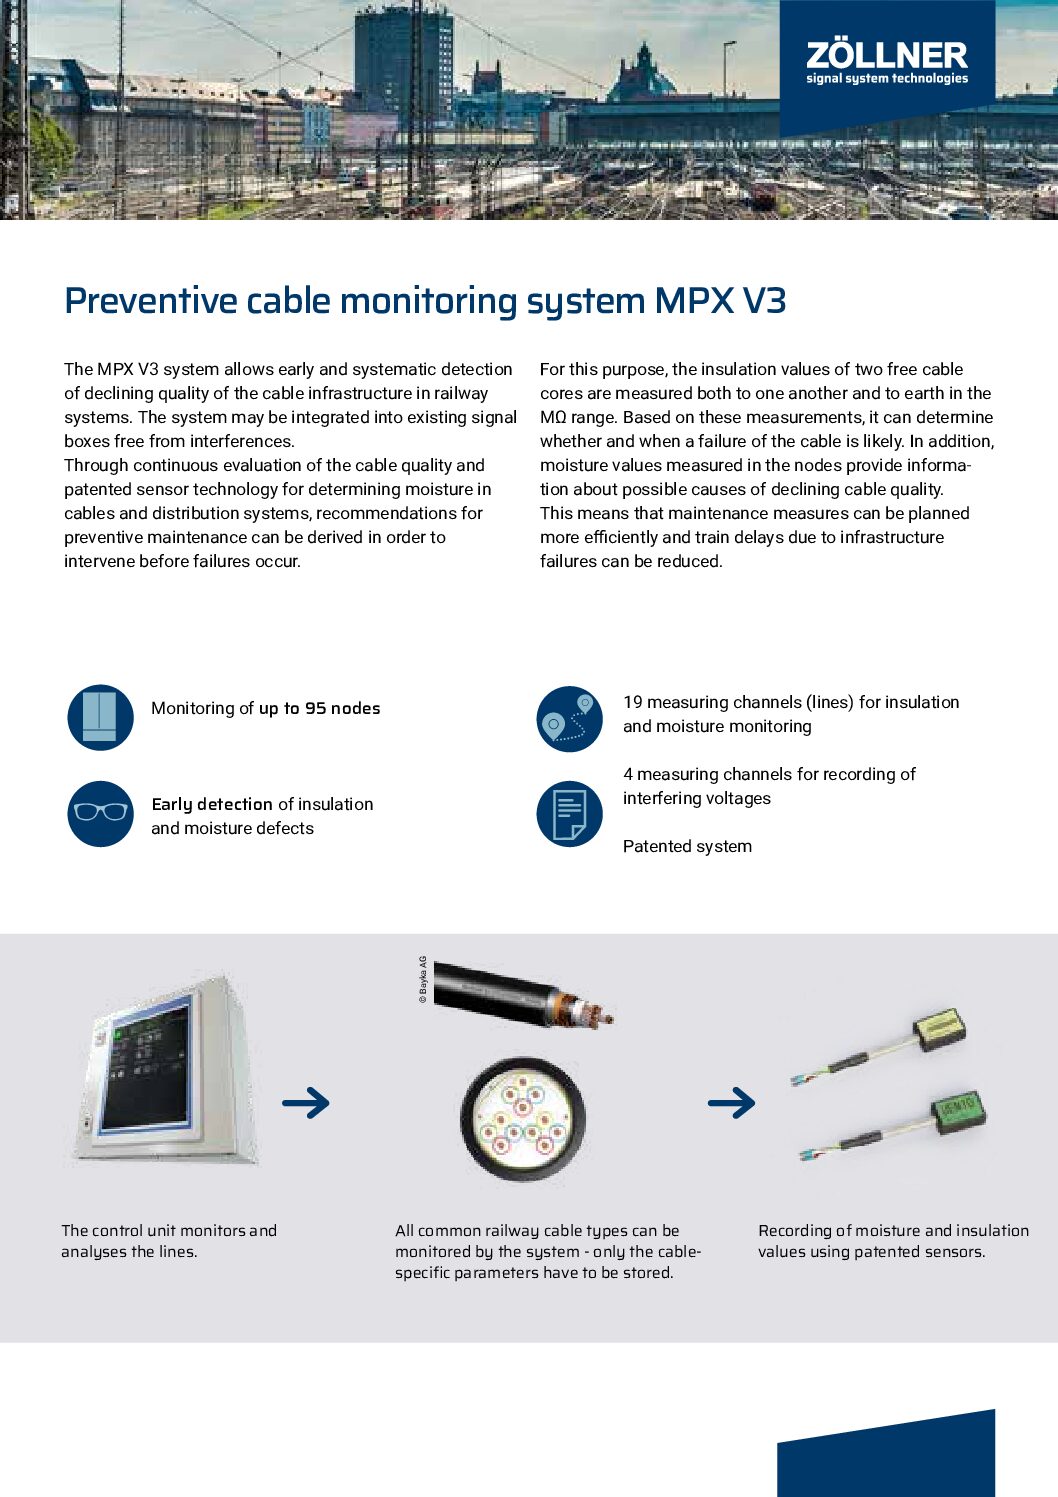 Preventive Cable Monitoring System MPX V3